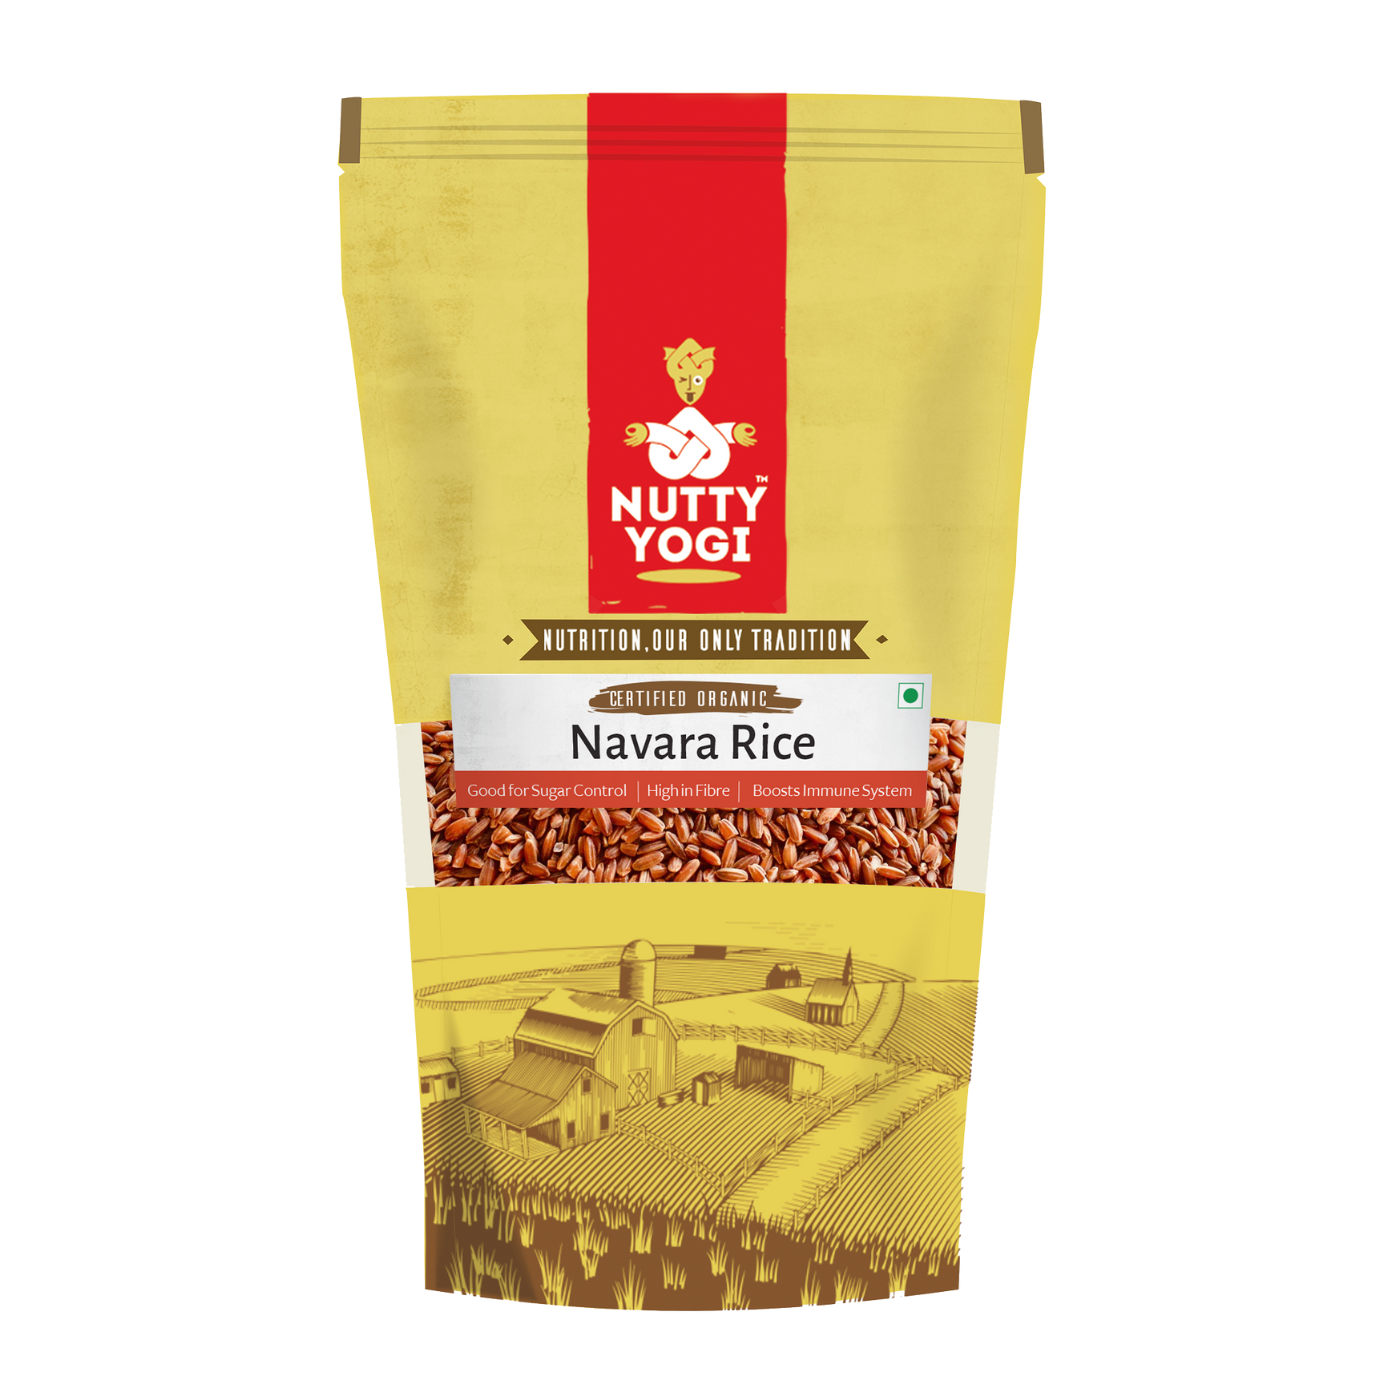 Nutty Yogi Organic Navara Rice